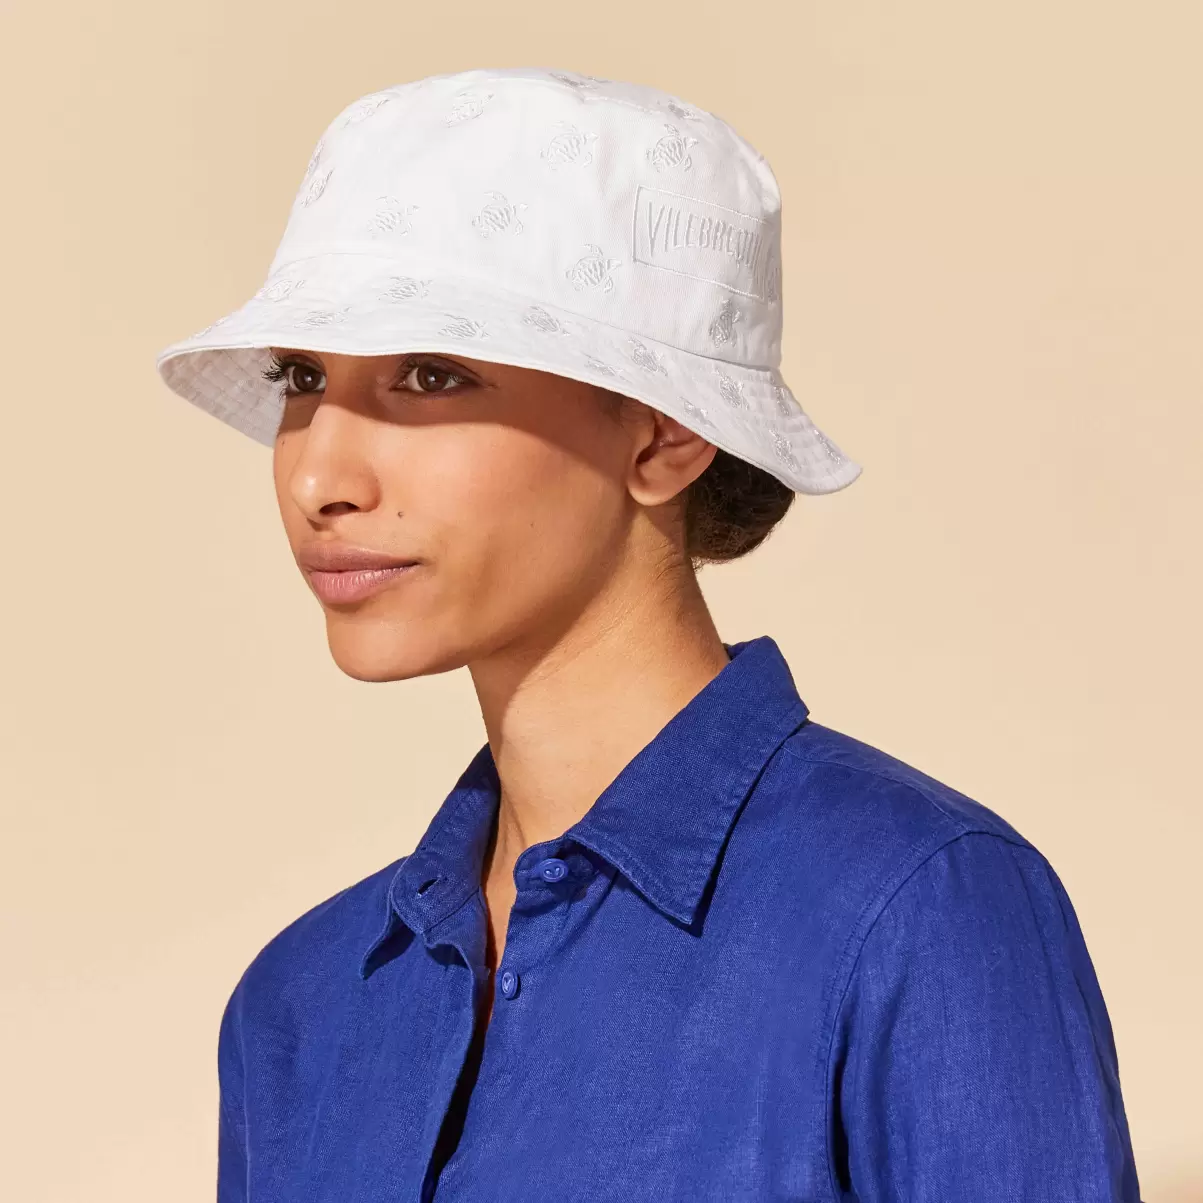 Blanco / Blanco Hombre Sombreros Embroidered Bucket Hat Tutles All Over Recomendar Vilebrequin